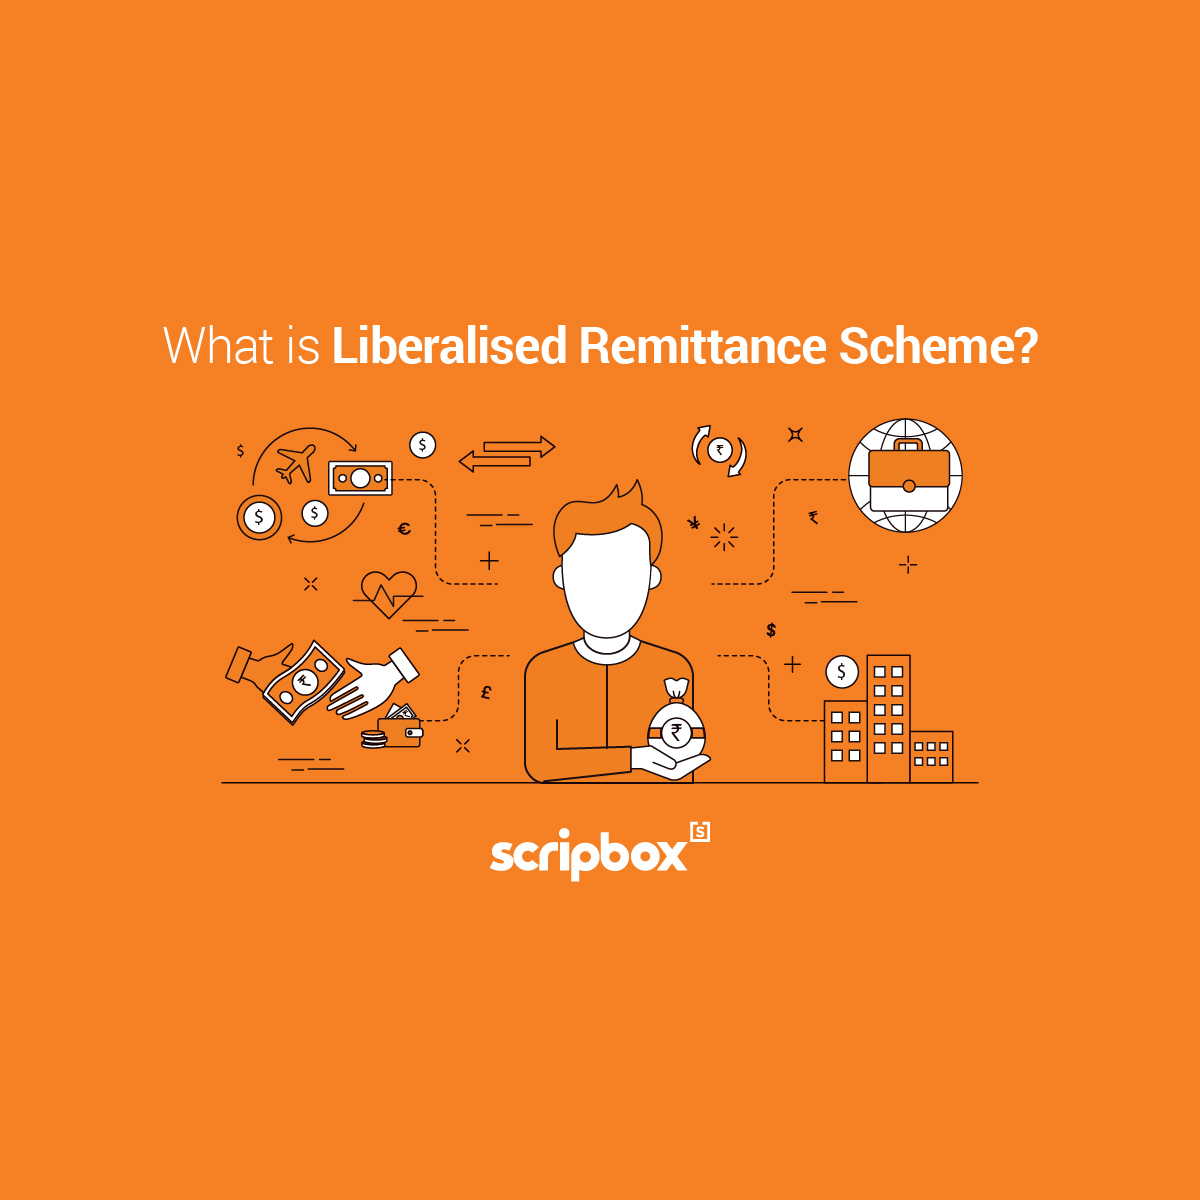 liberalised-remittance-scheme-image